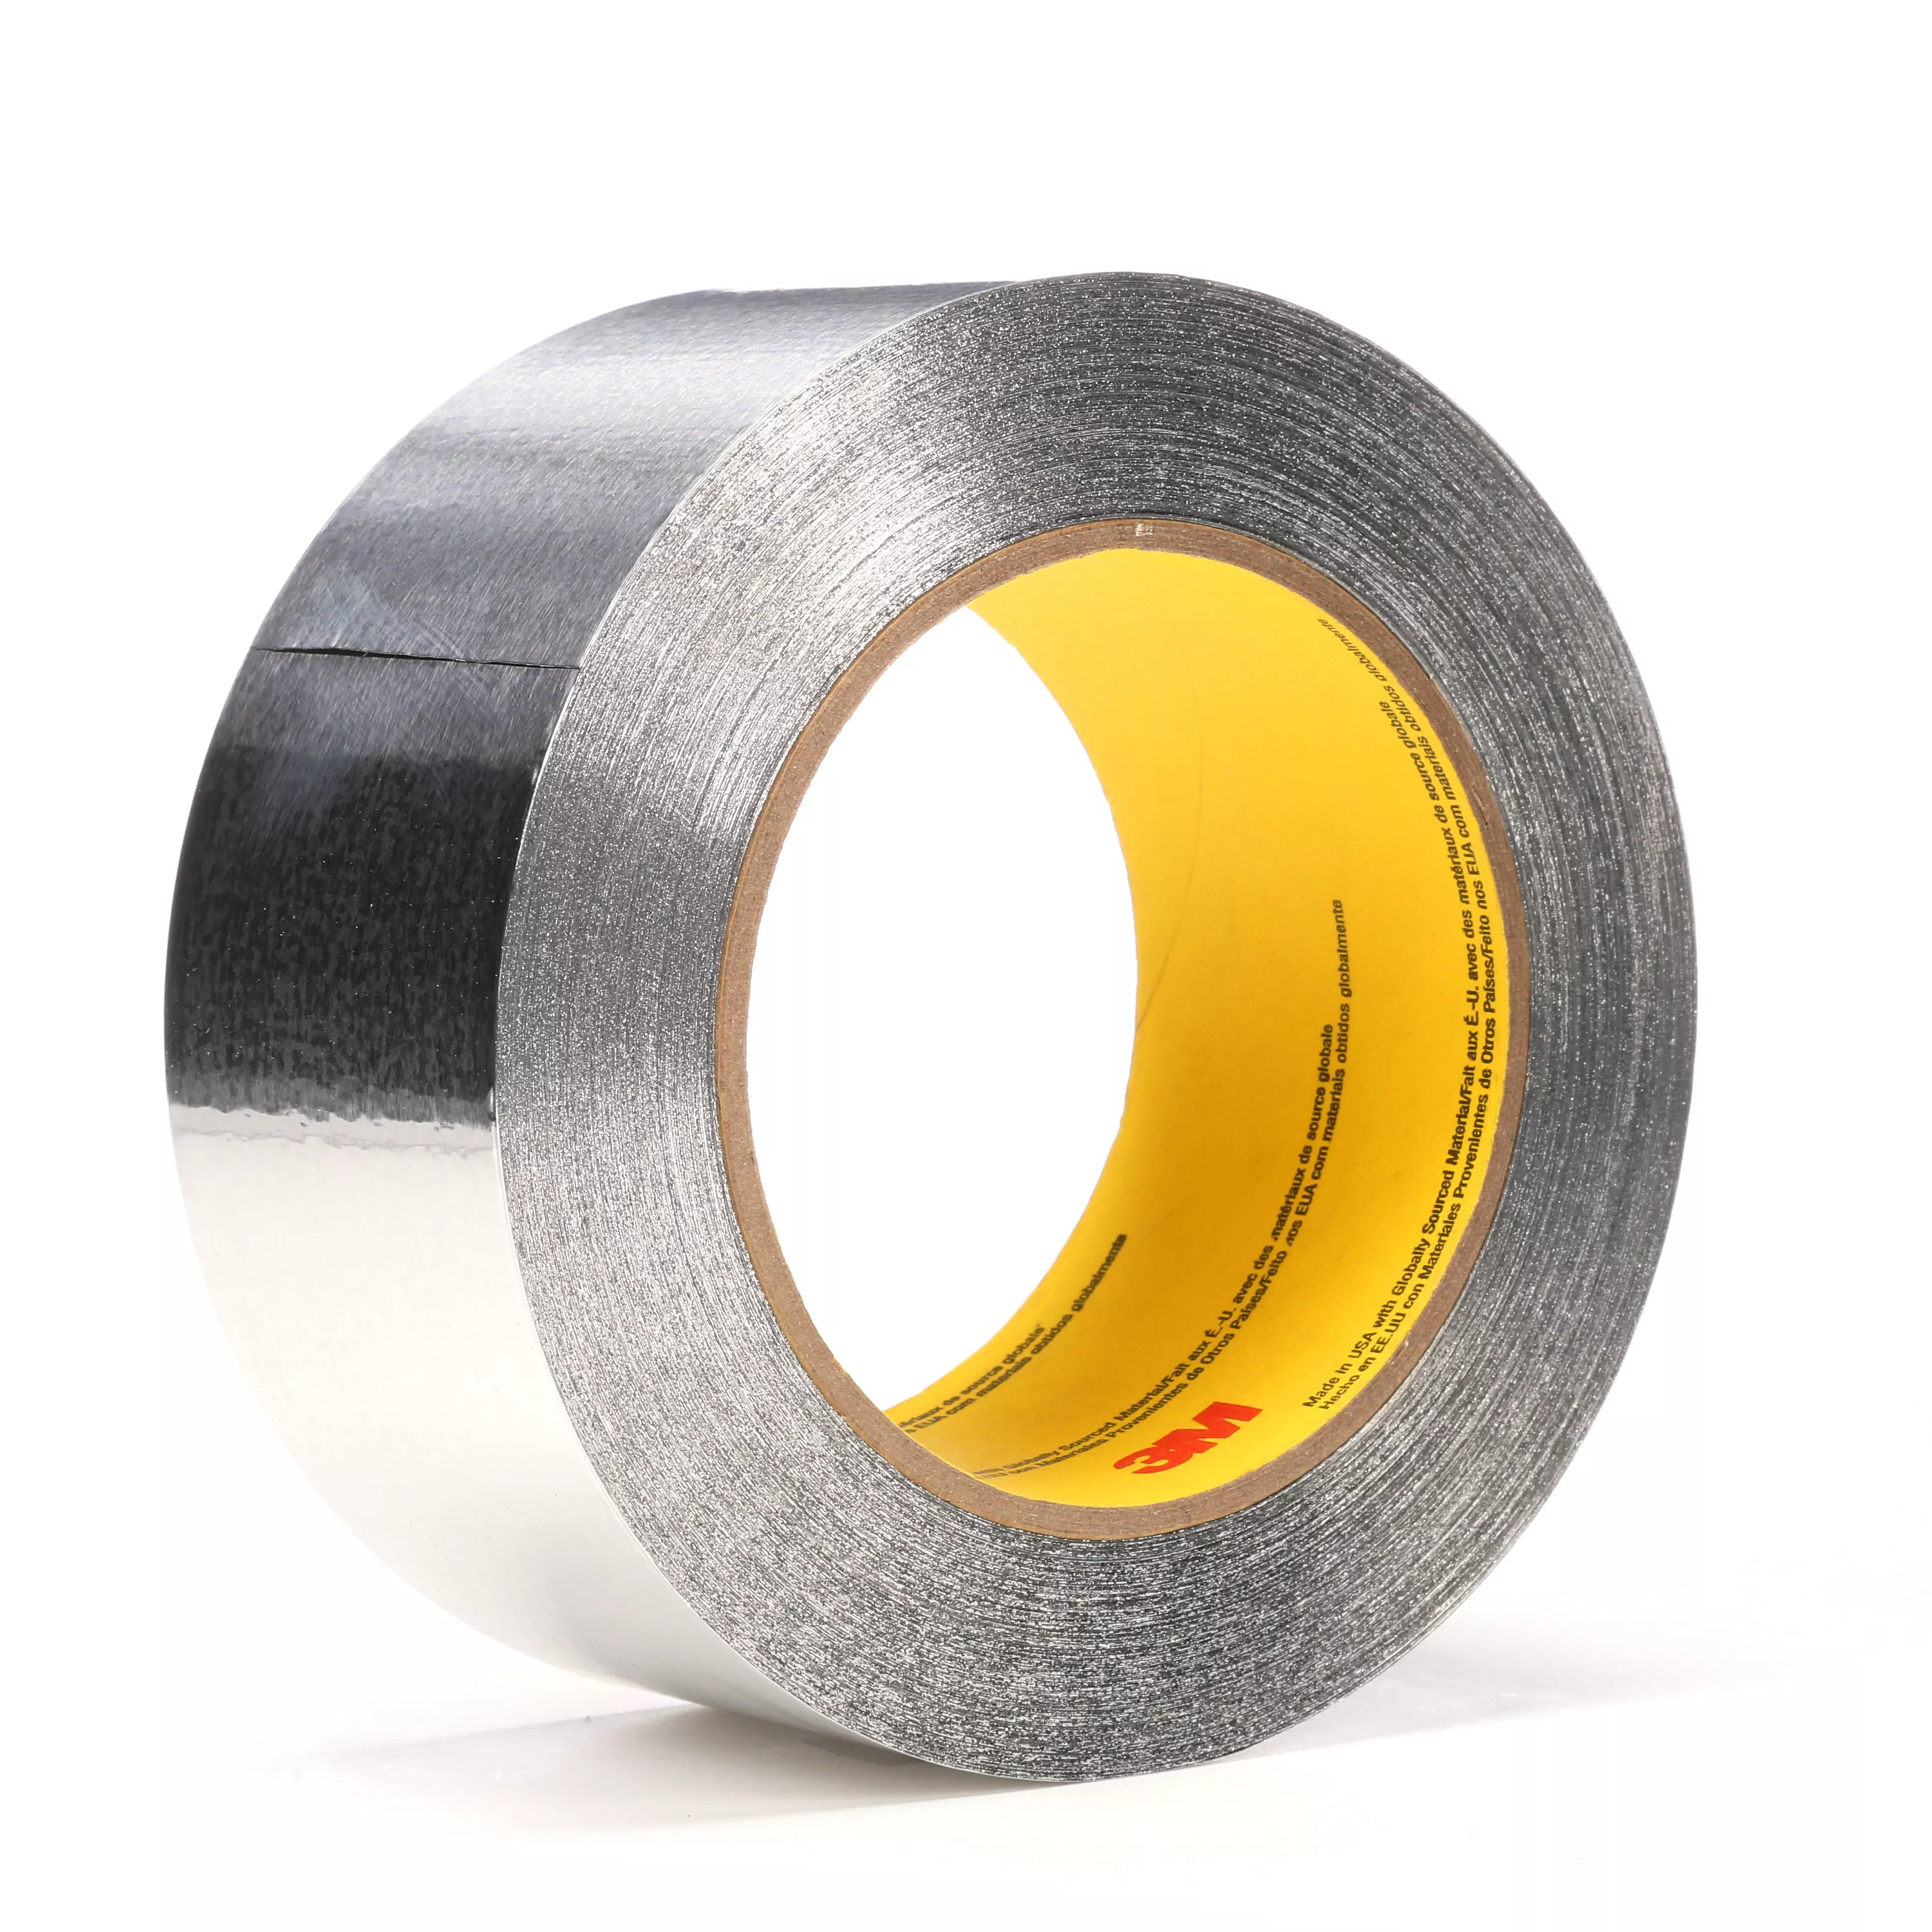 3M™ Aluminum Foil Tape 34383, Silver, 2 in x 60 yd, 4.5 mil, 24
Rolls/Case